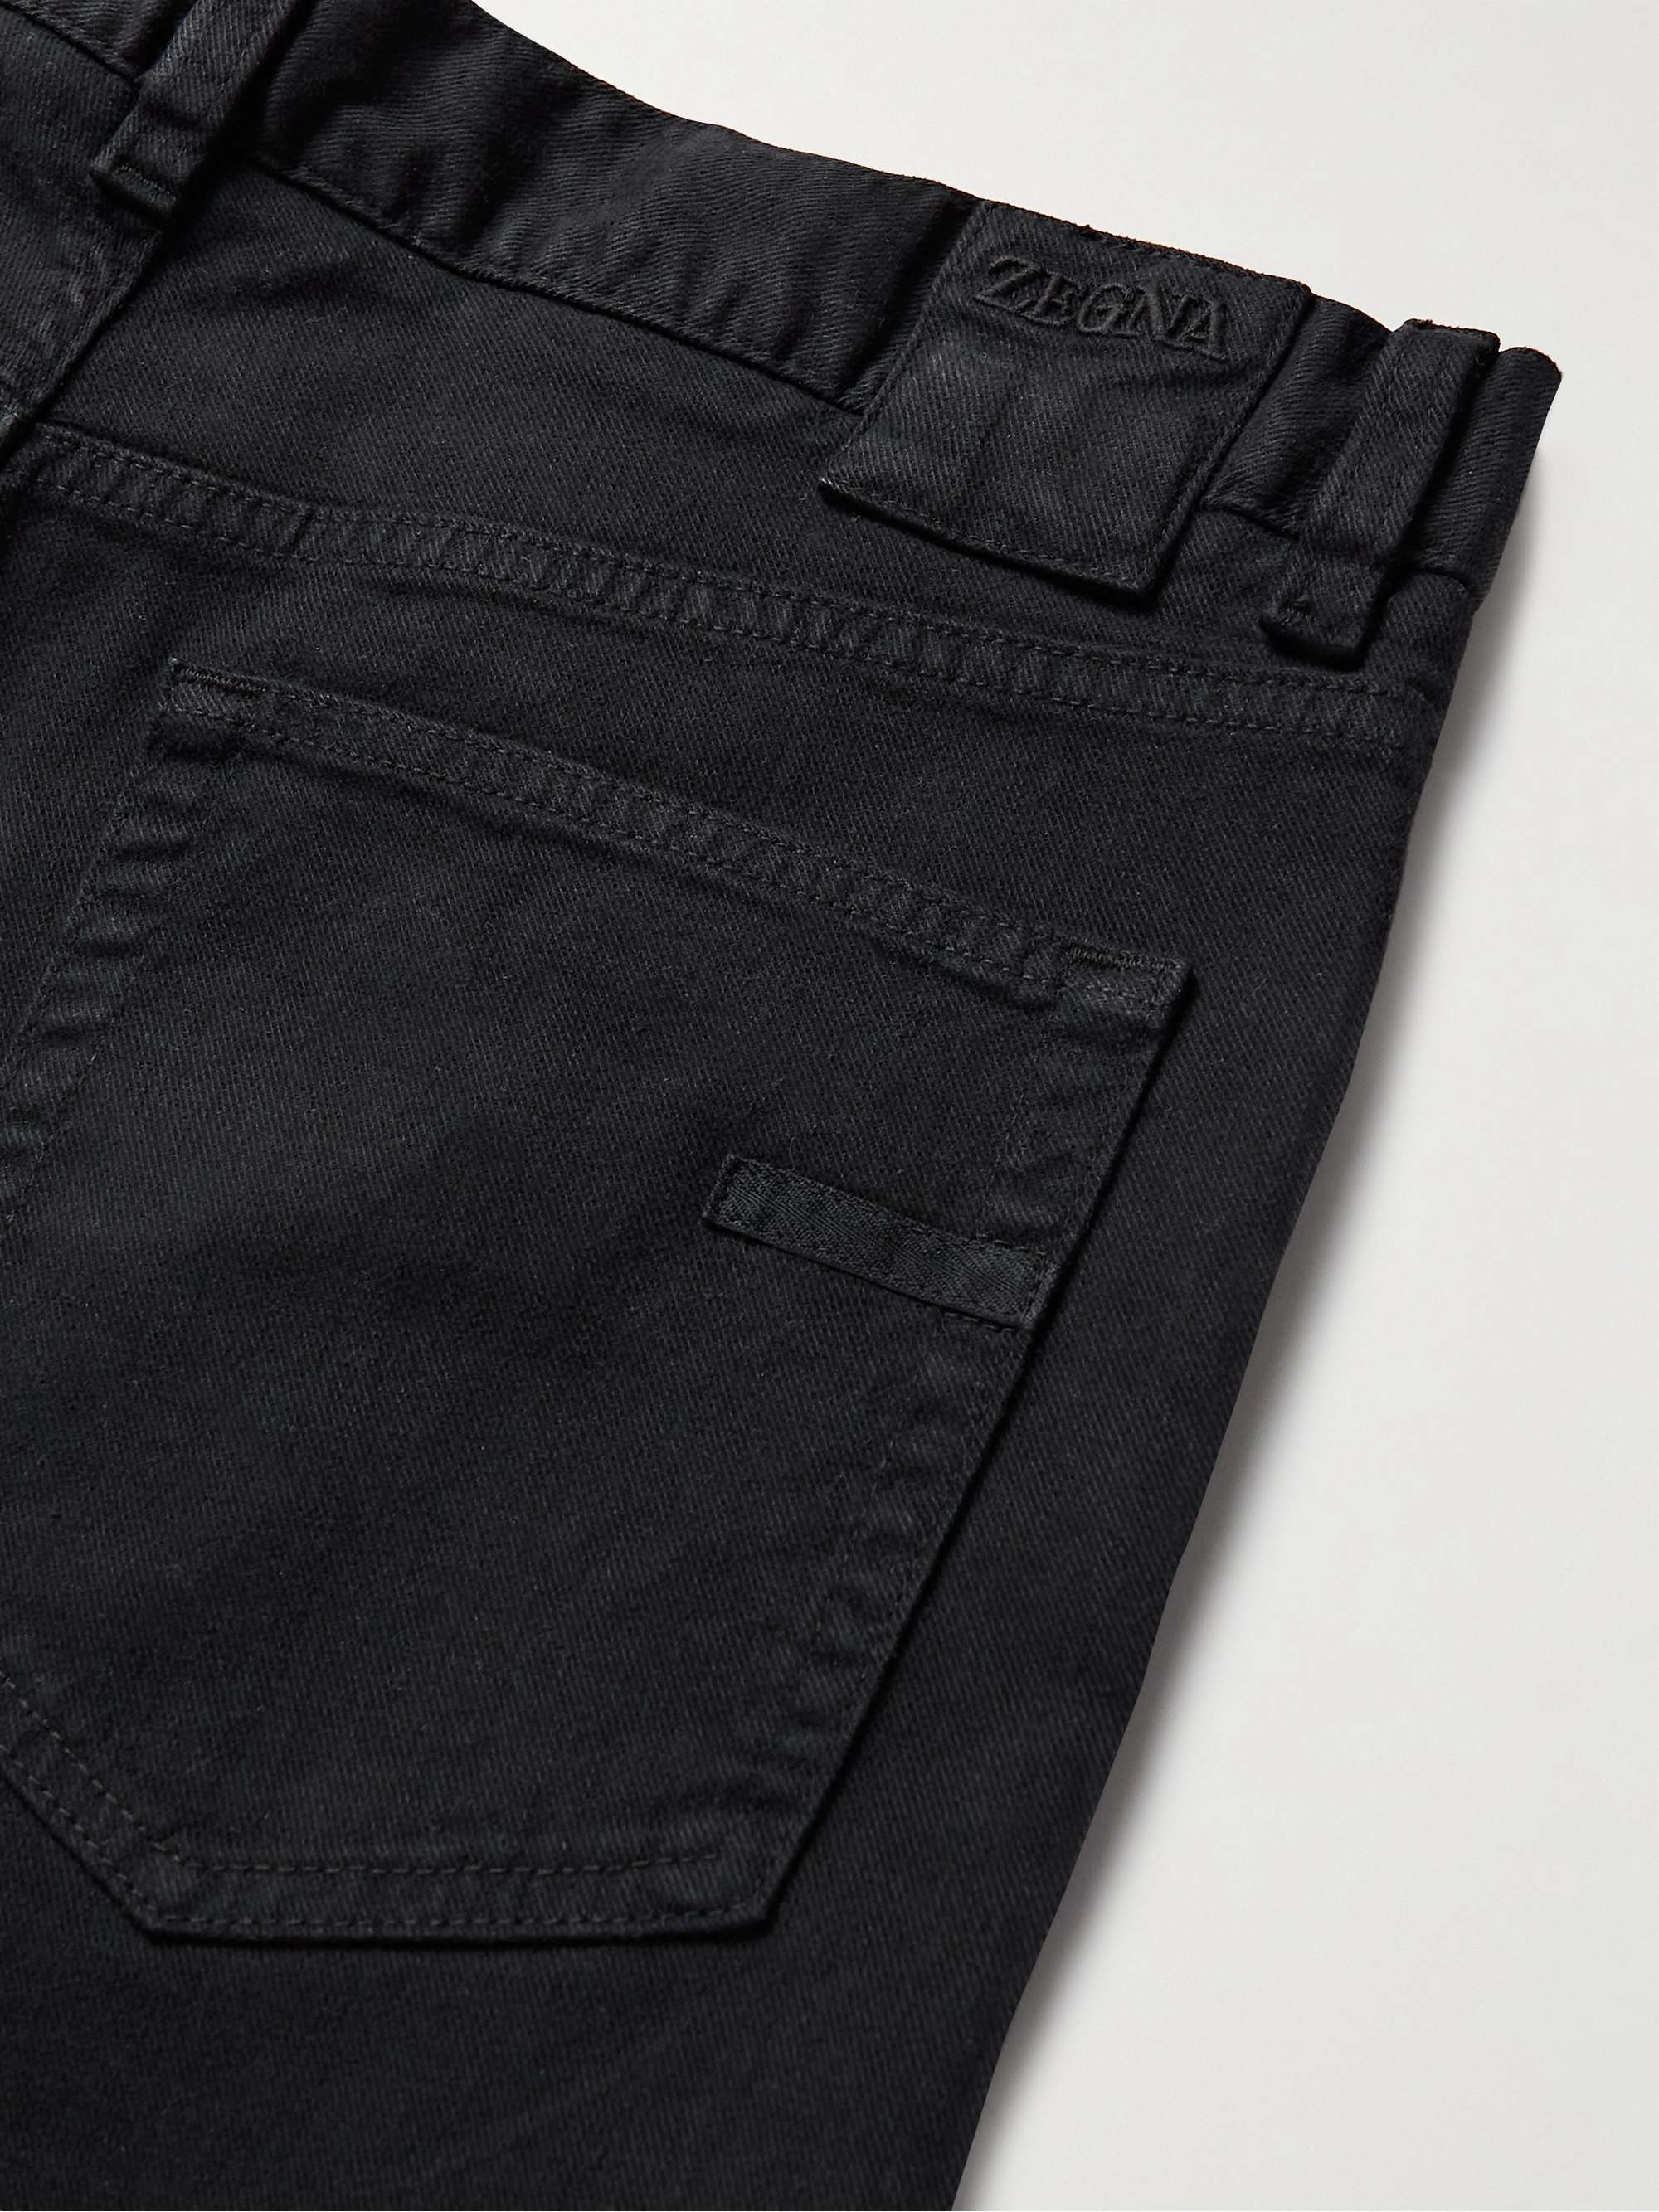 Black City Slim-Fit Jeans | ZEGNA | MR PORTER